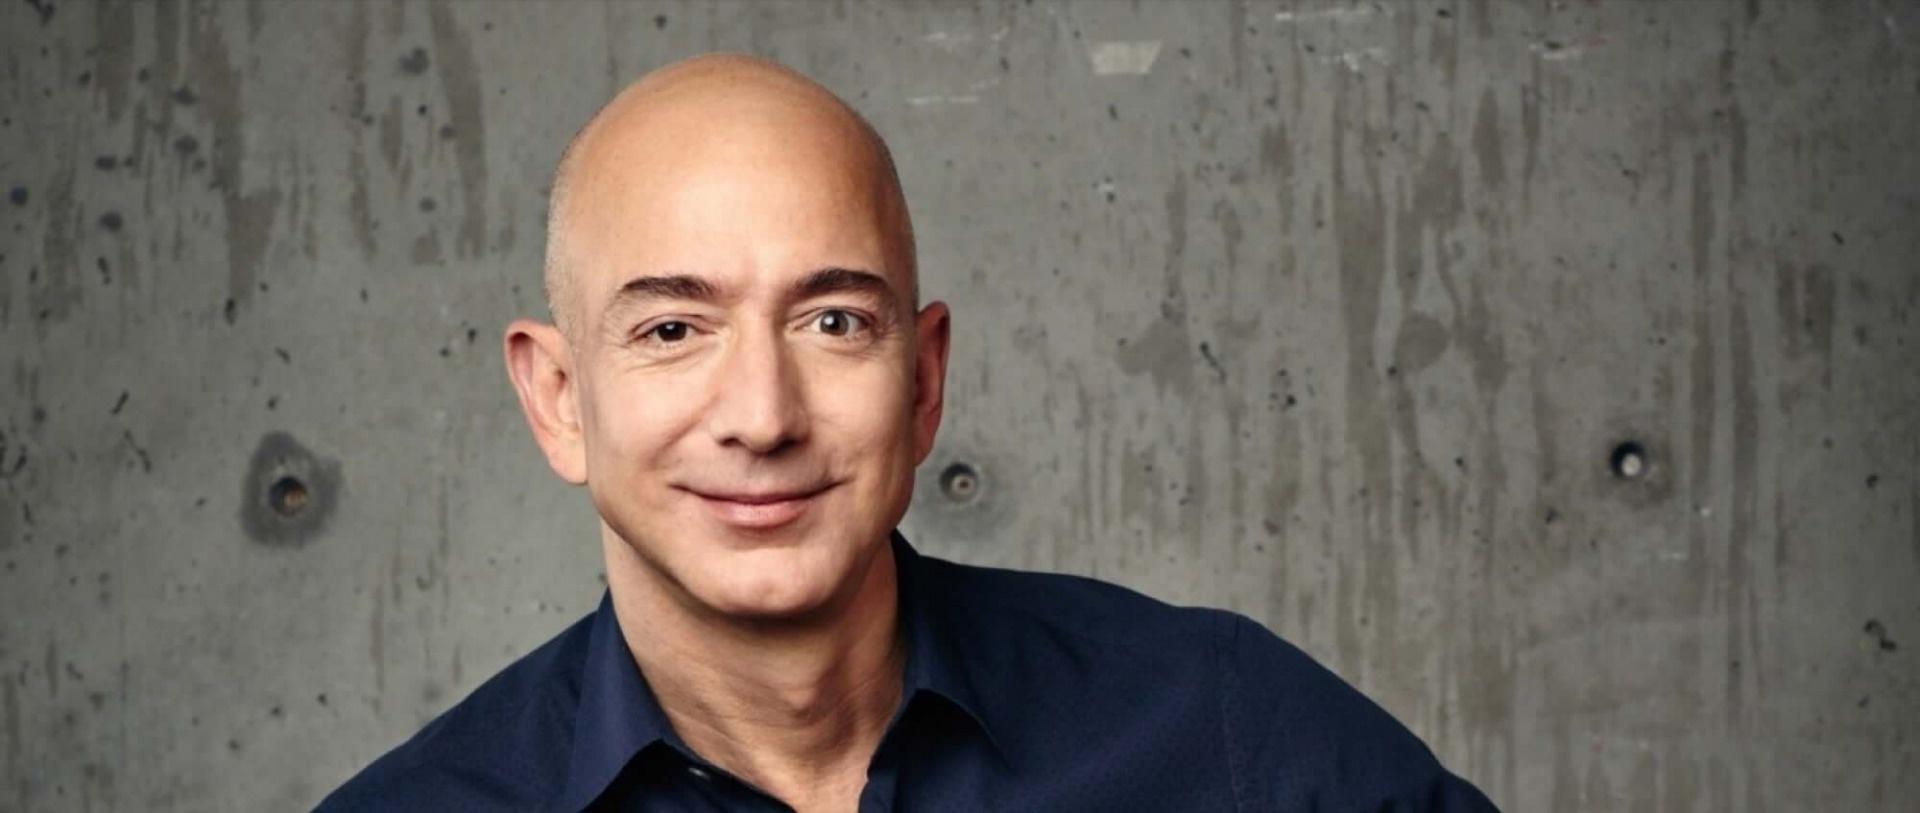 Amazon and Value Creation: A Bezos Farewell